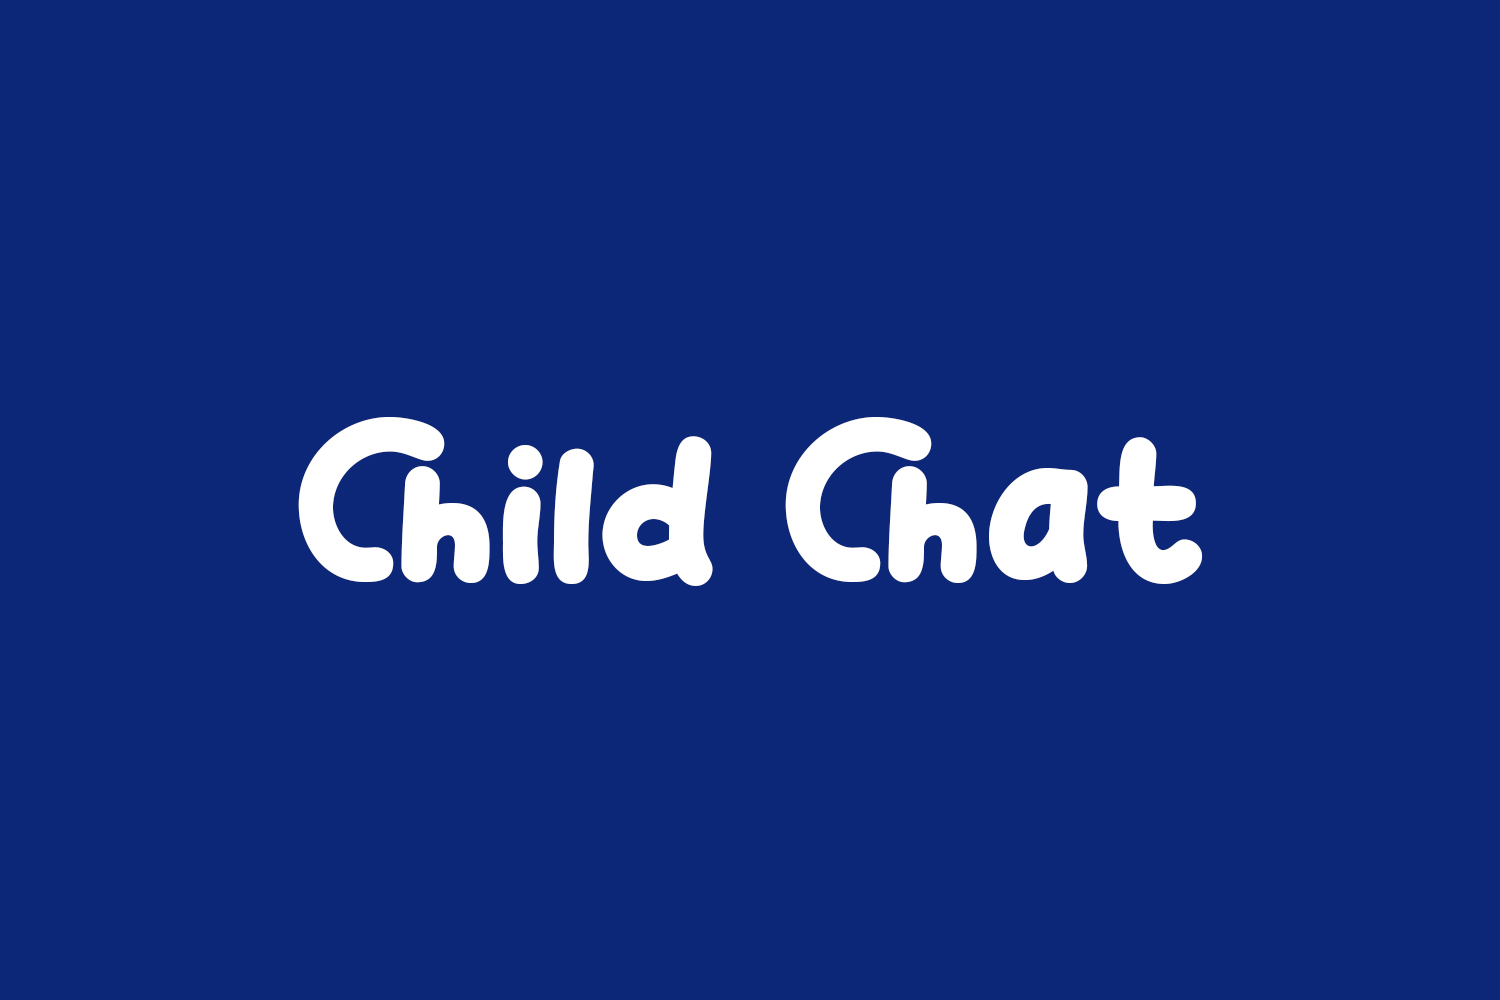 Child Chat Free Font